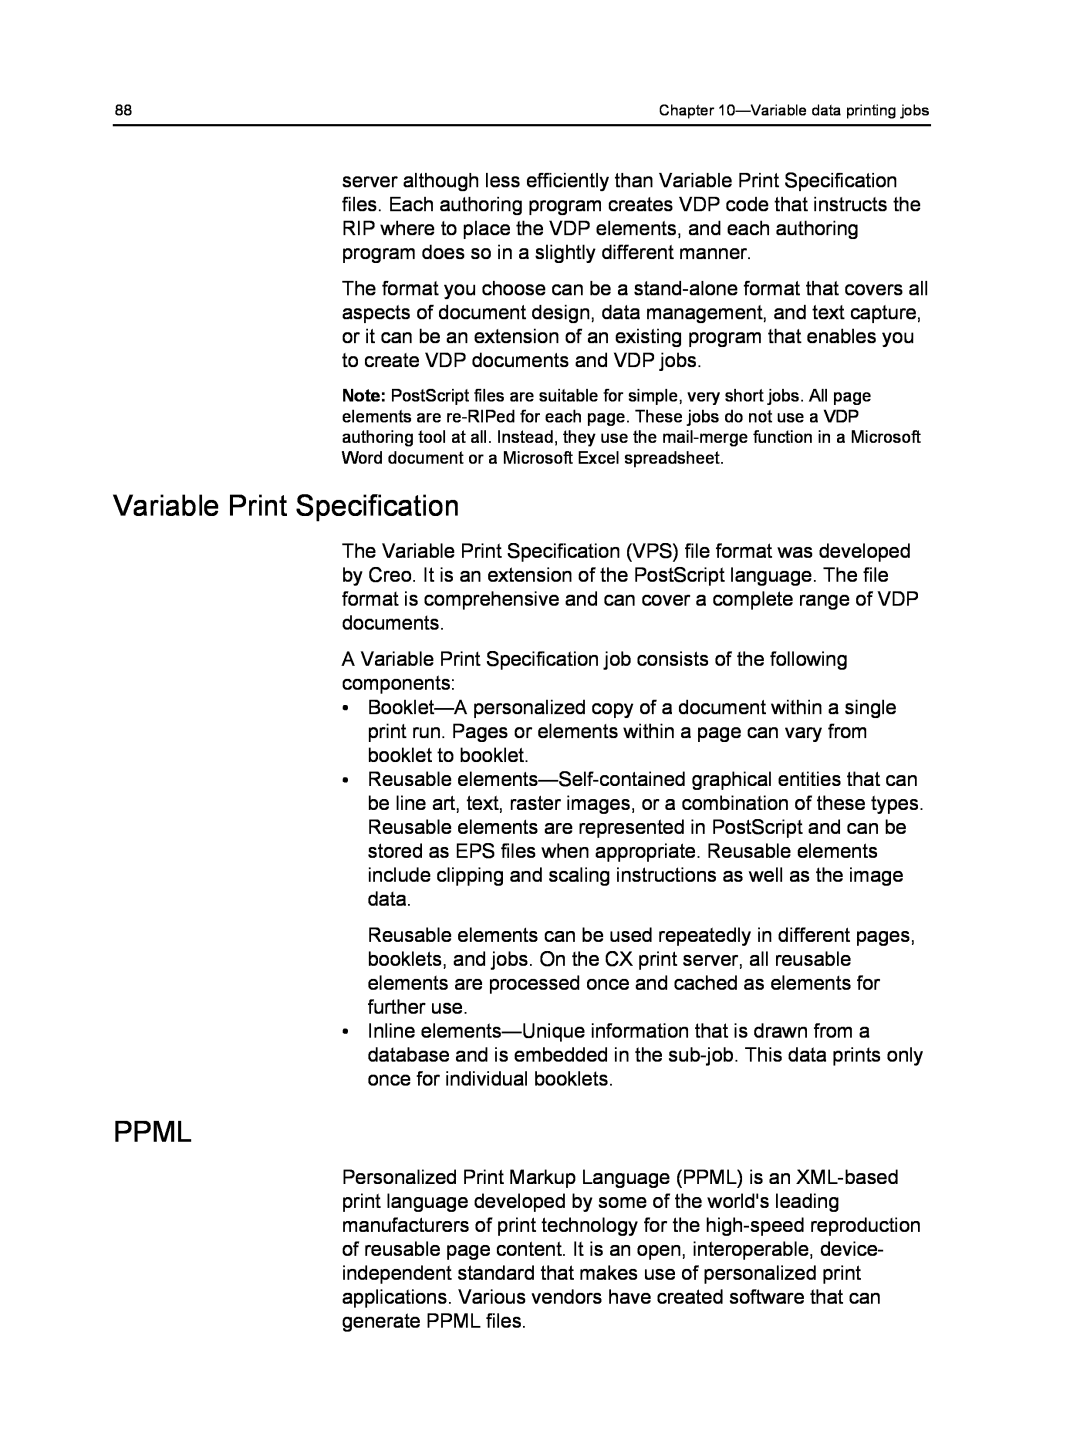 Xerox 560, 550 manual Variable Print Specification, Ppml, Variabledata printing jobs 